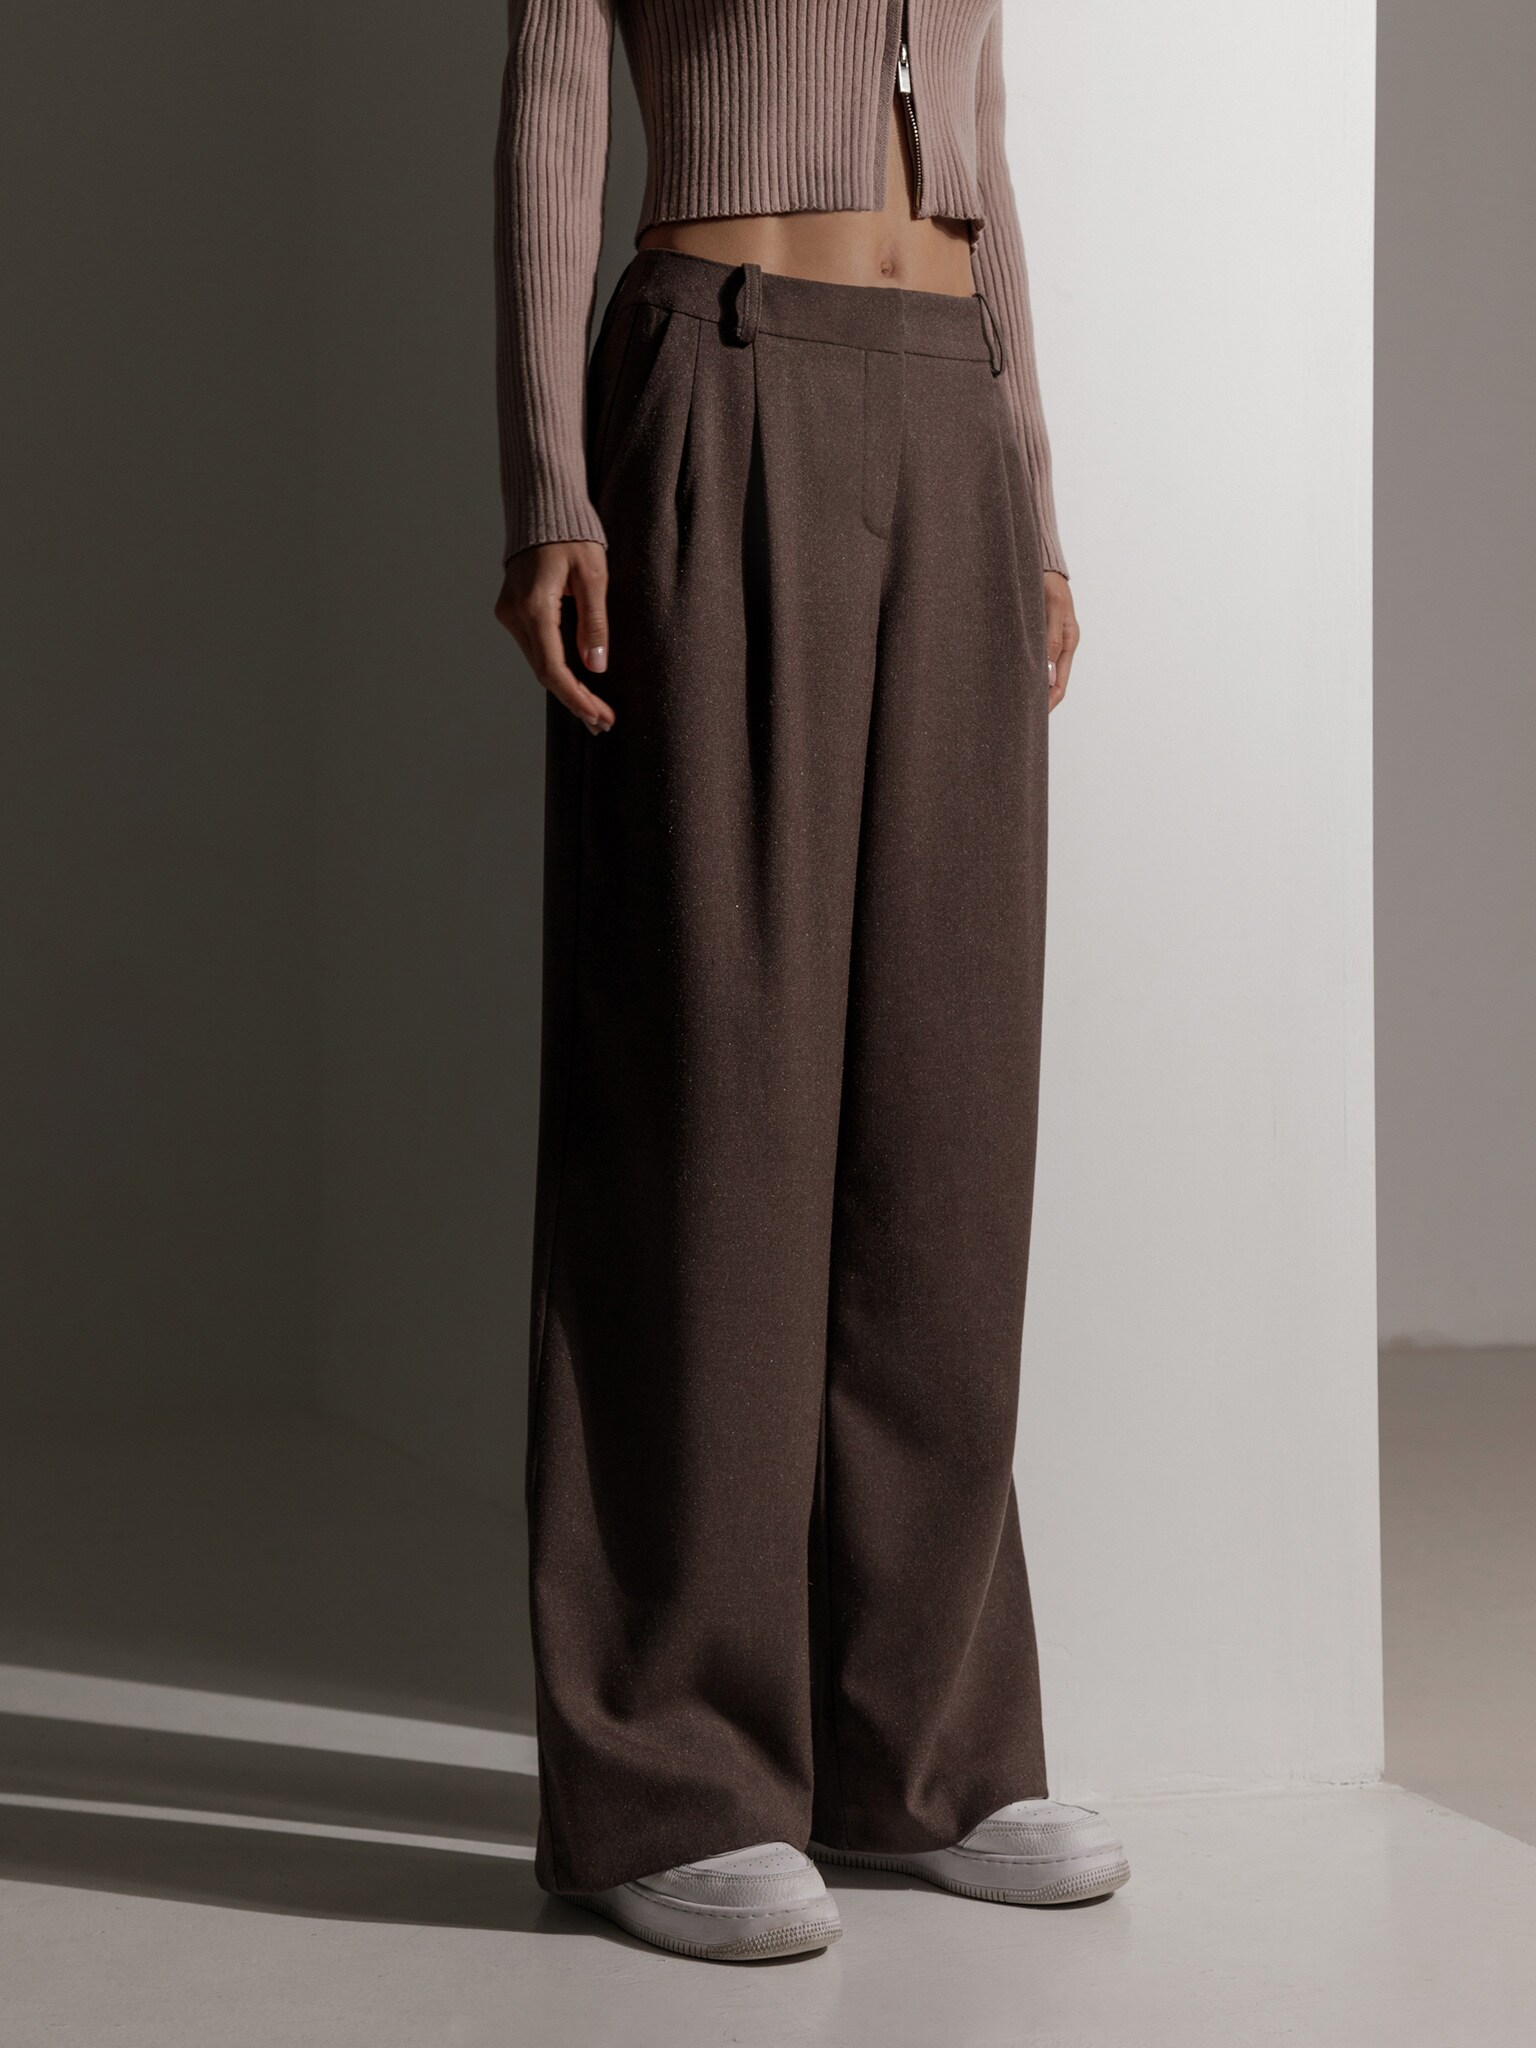 Шерстяные брюки-палаццо с защипами :: LICHI - Online fashion store